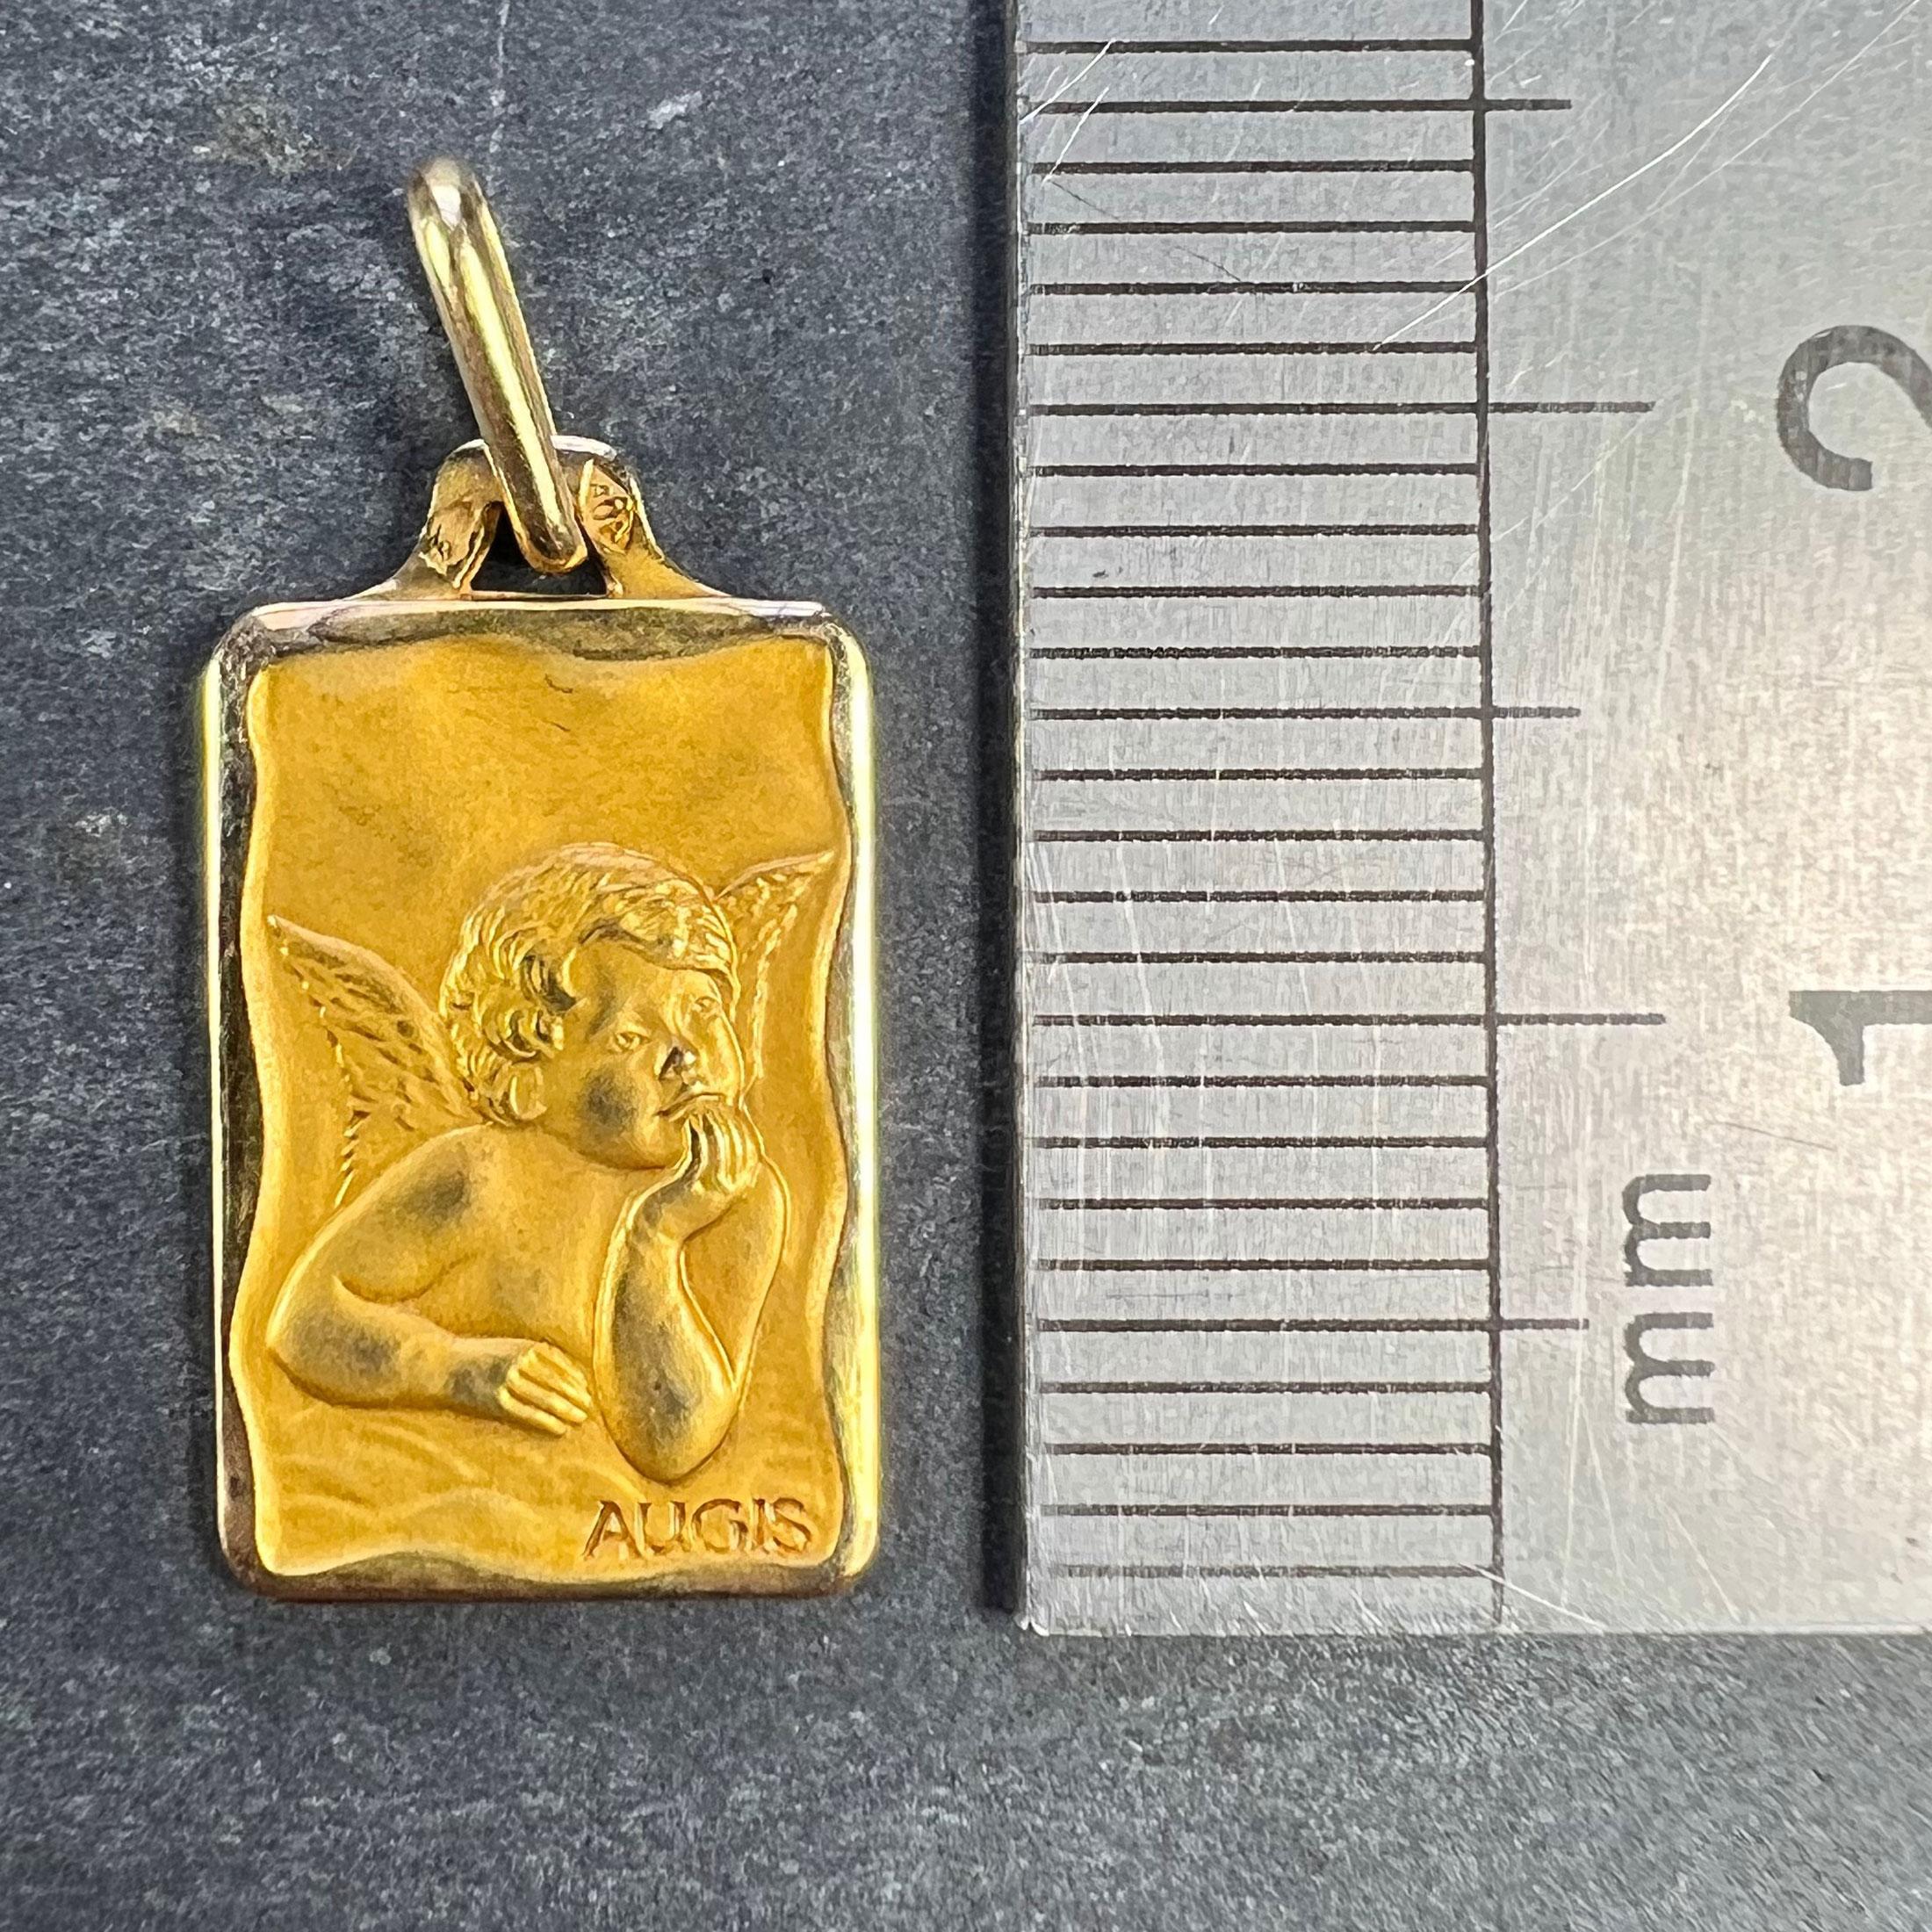 French Augis Raphael’s Cherub 18K Yellow Gold Charm Pendant For Sale 5